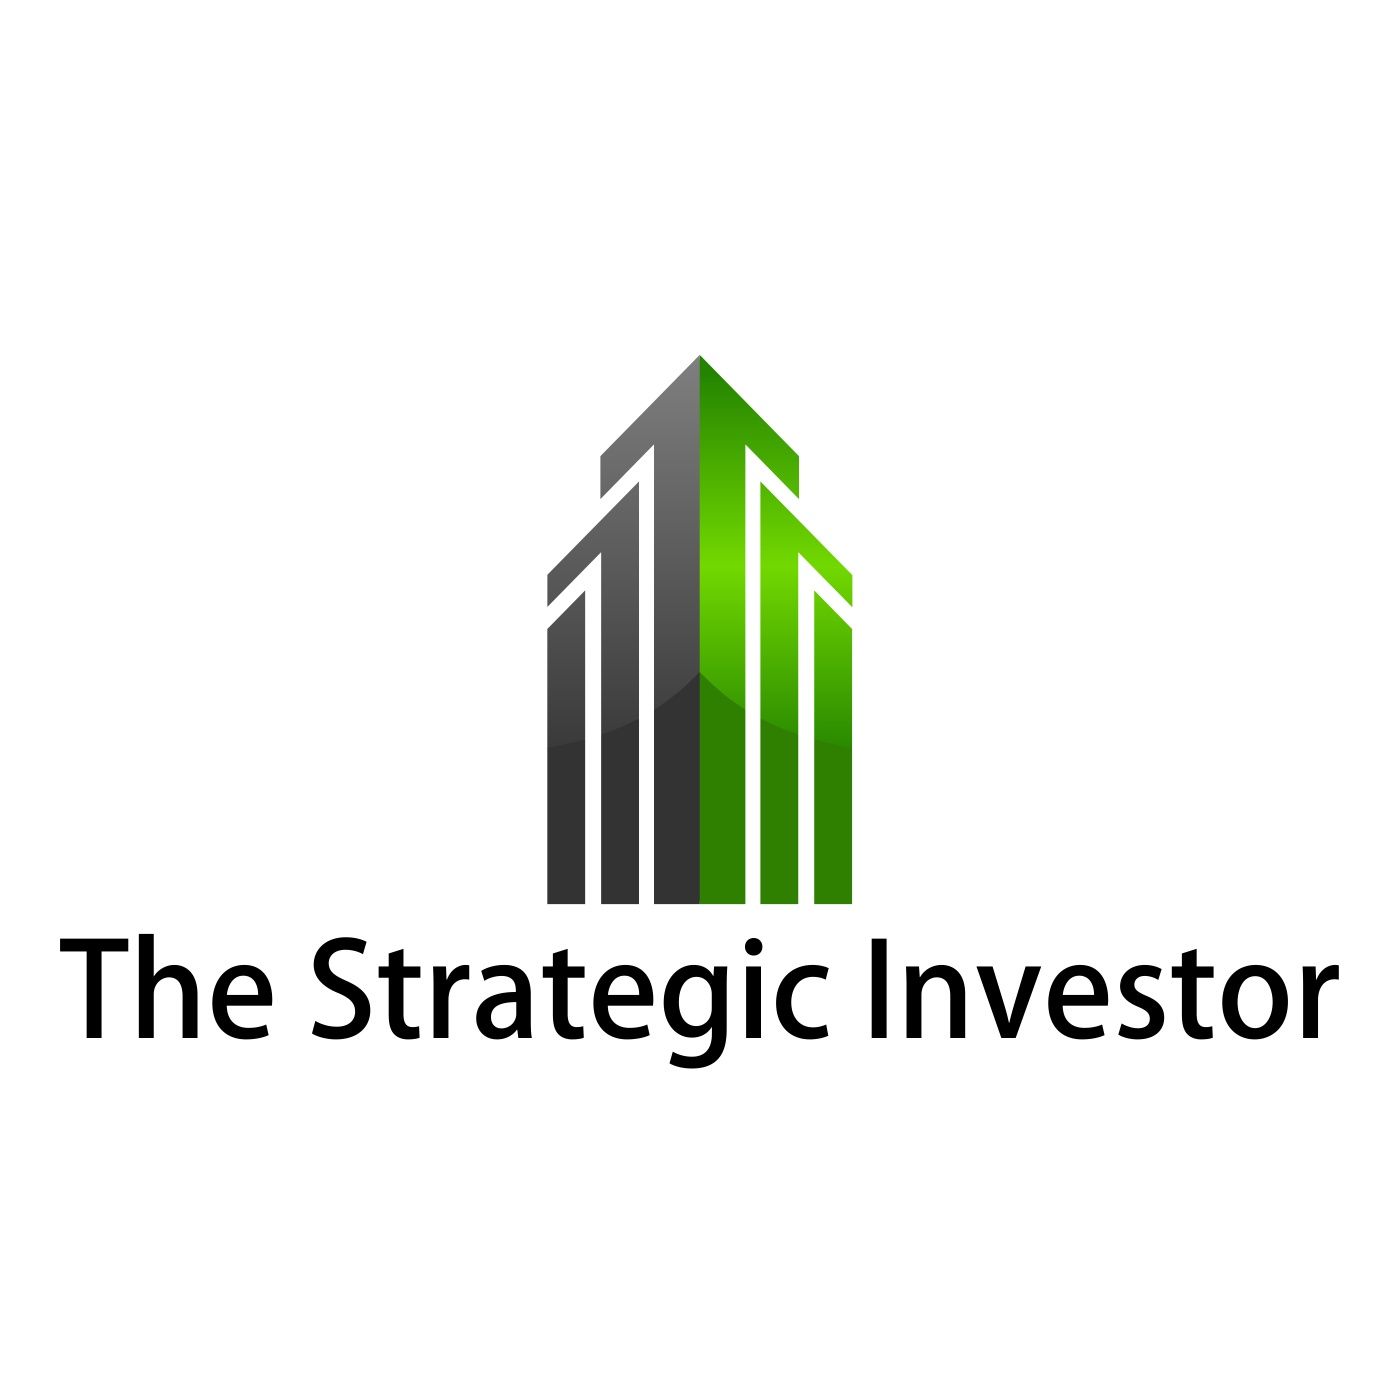 Strategic Investor Radio